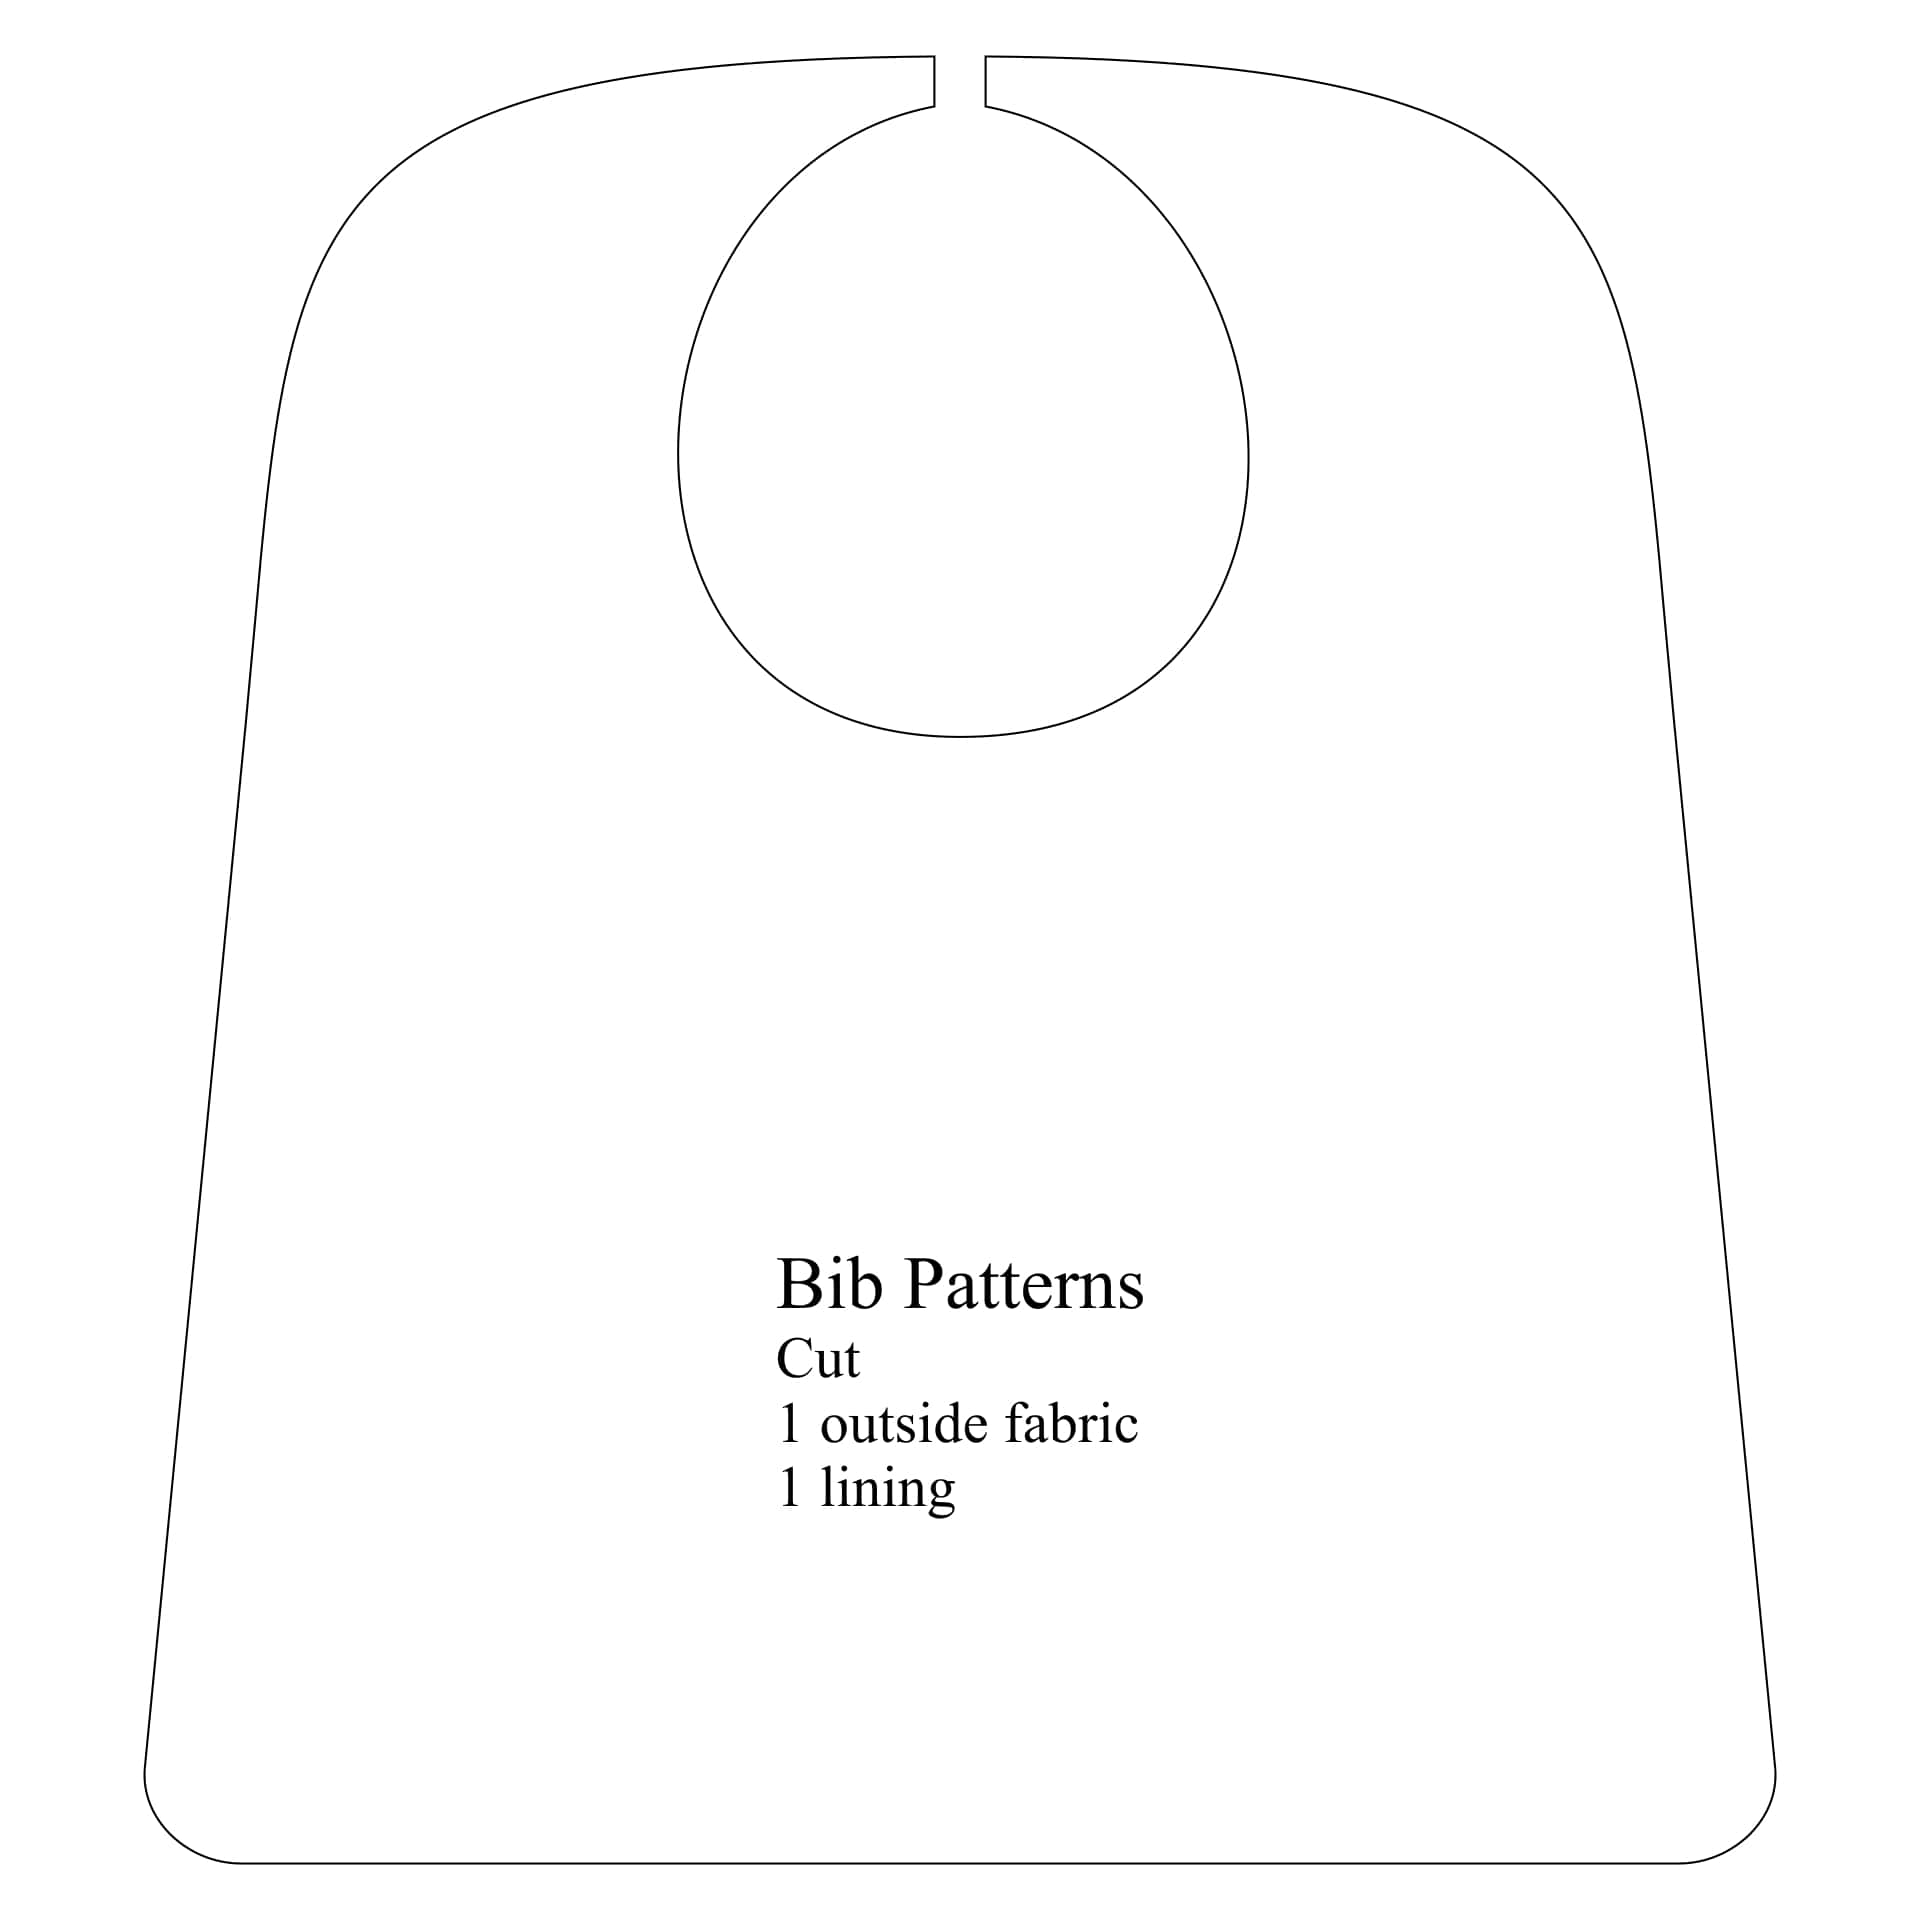 Printable Adult Bib Patterns_69344